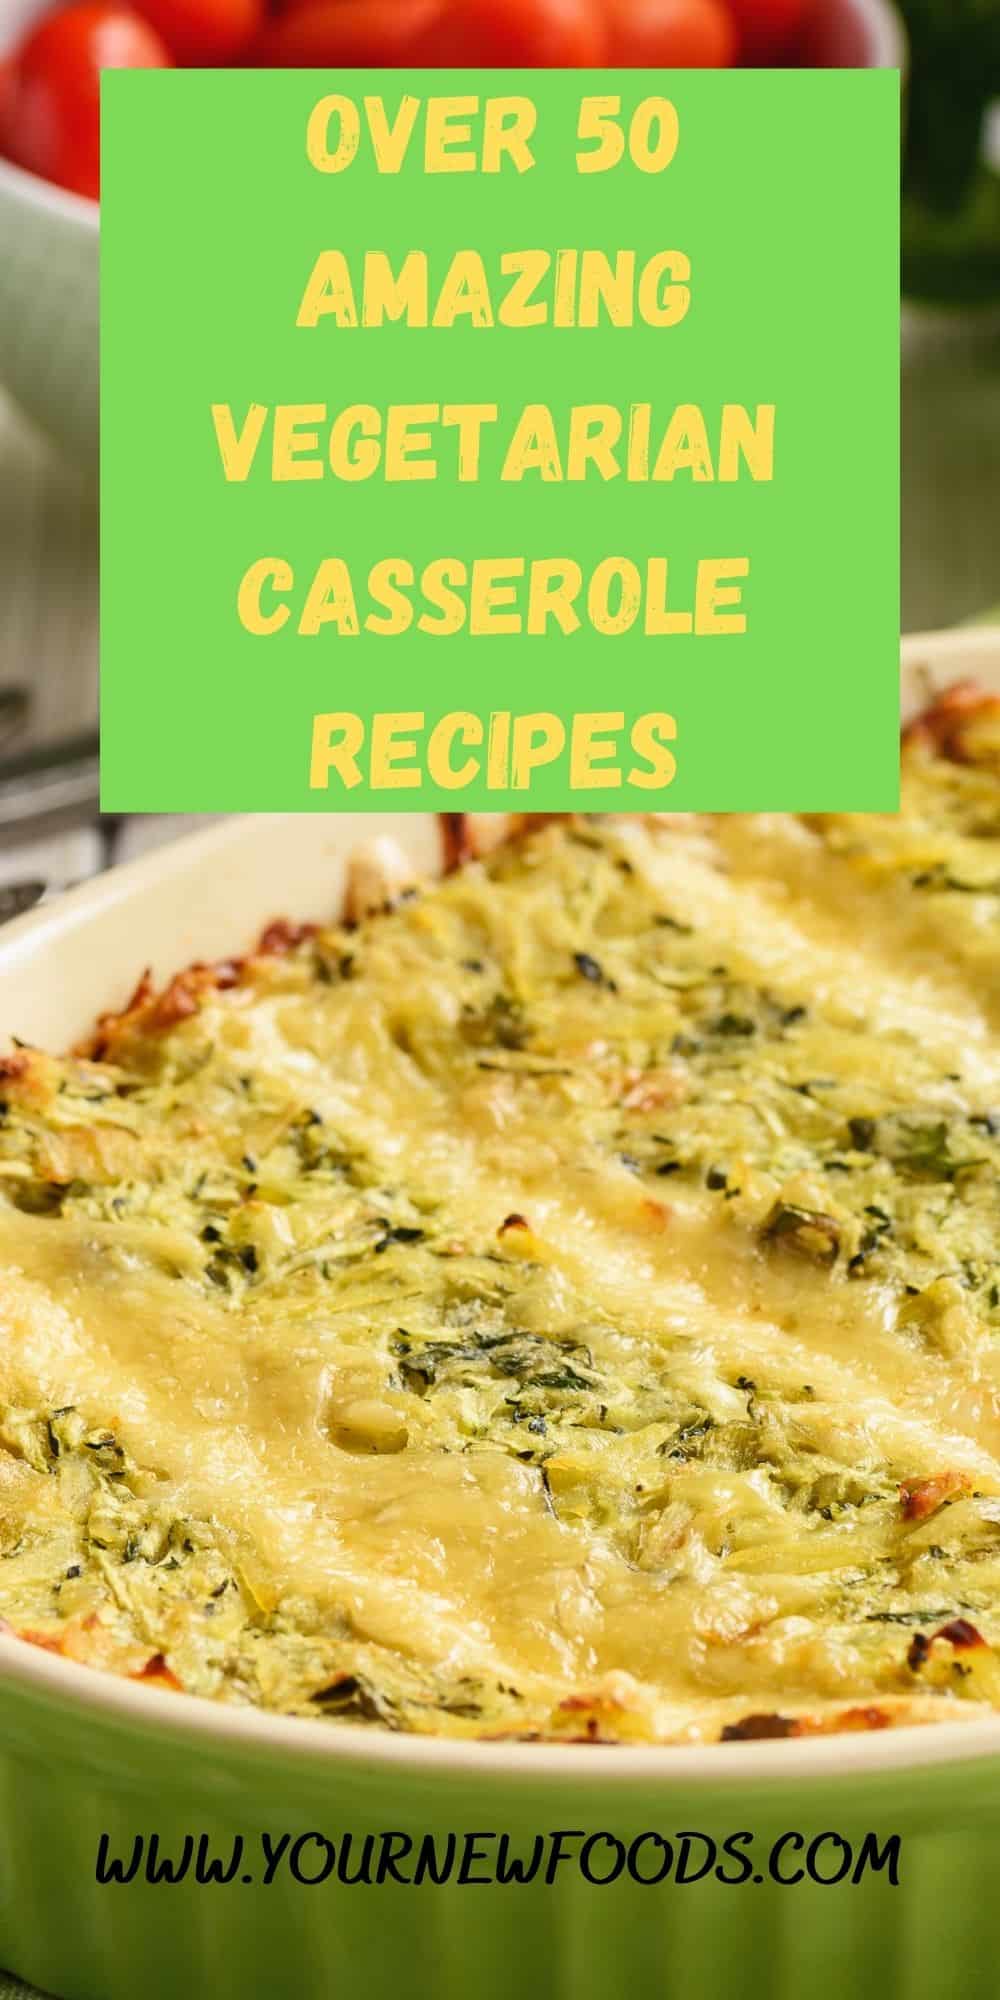 Over 50 Amazing Vegetarian Casserole Recipes